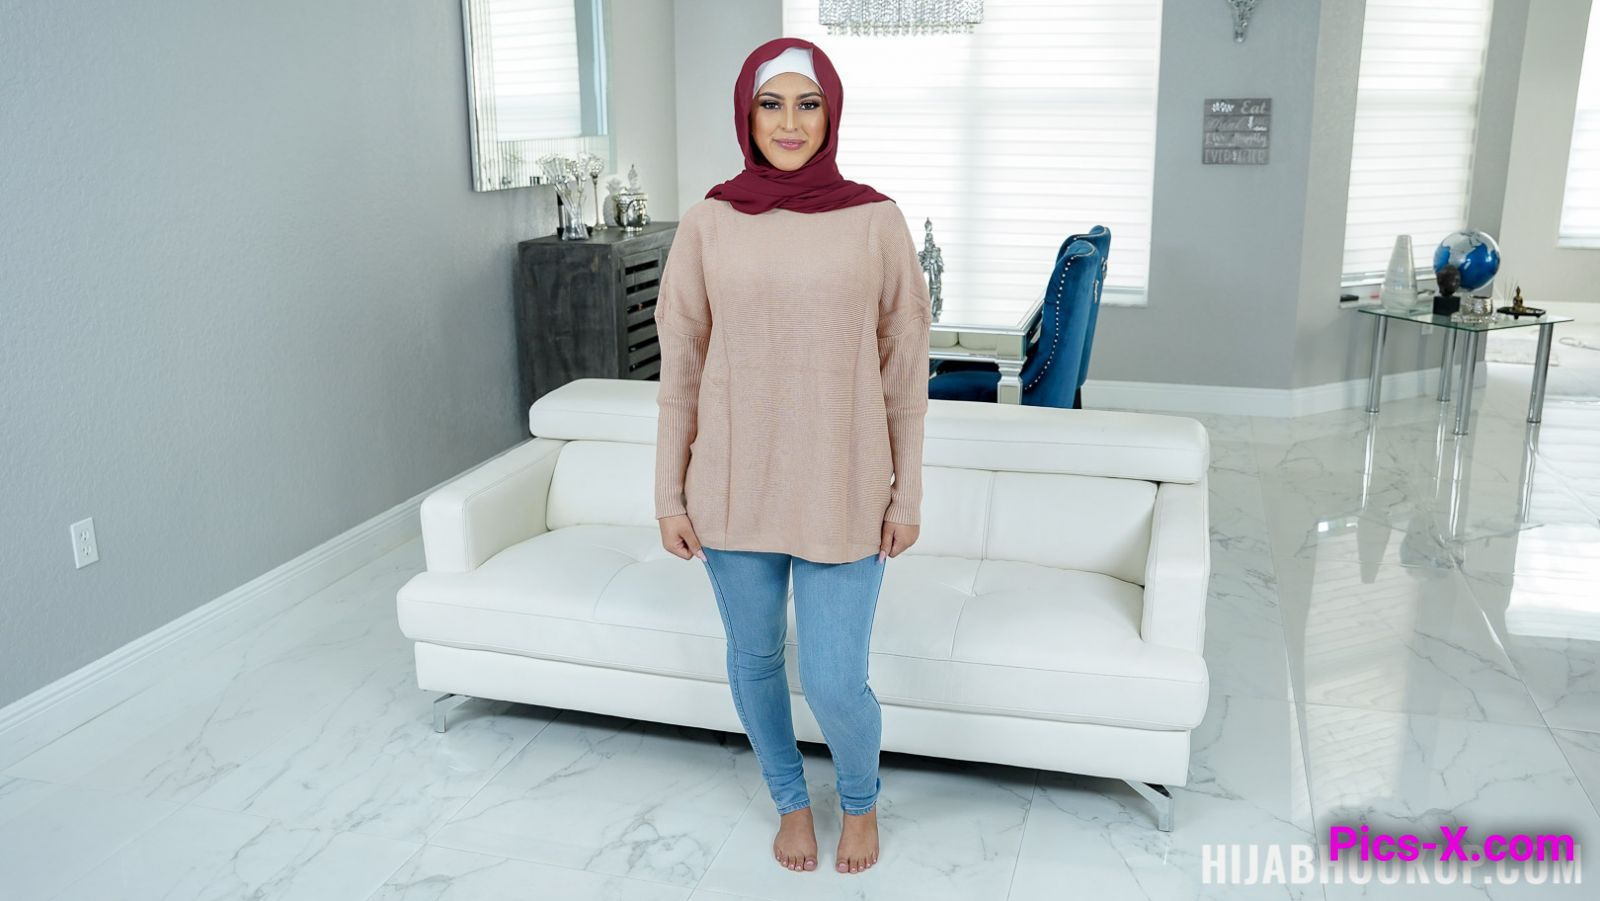 A Quick Learner - Hijab Hookup - Image 1